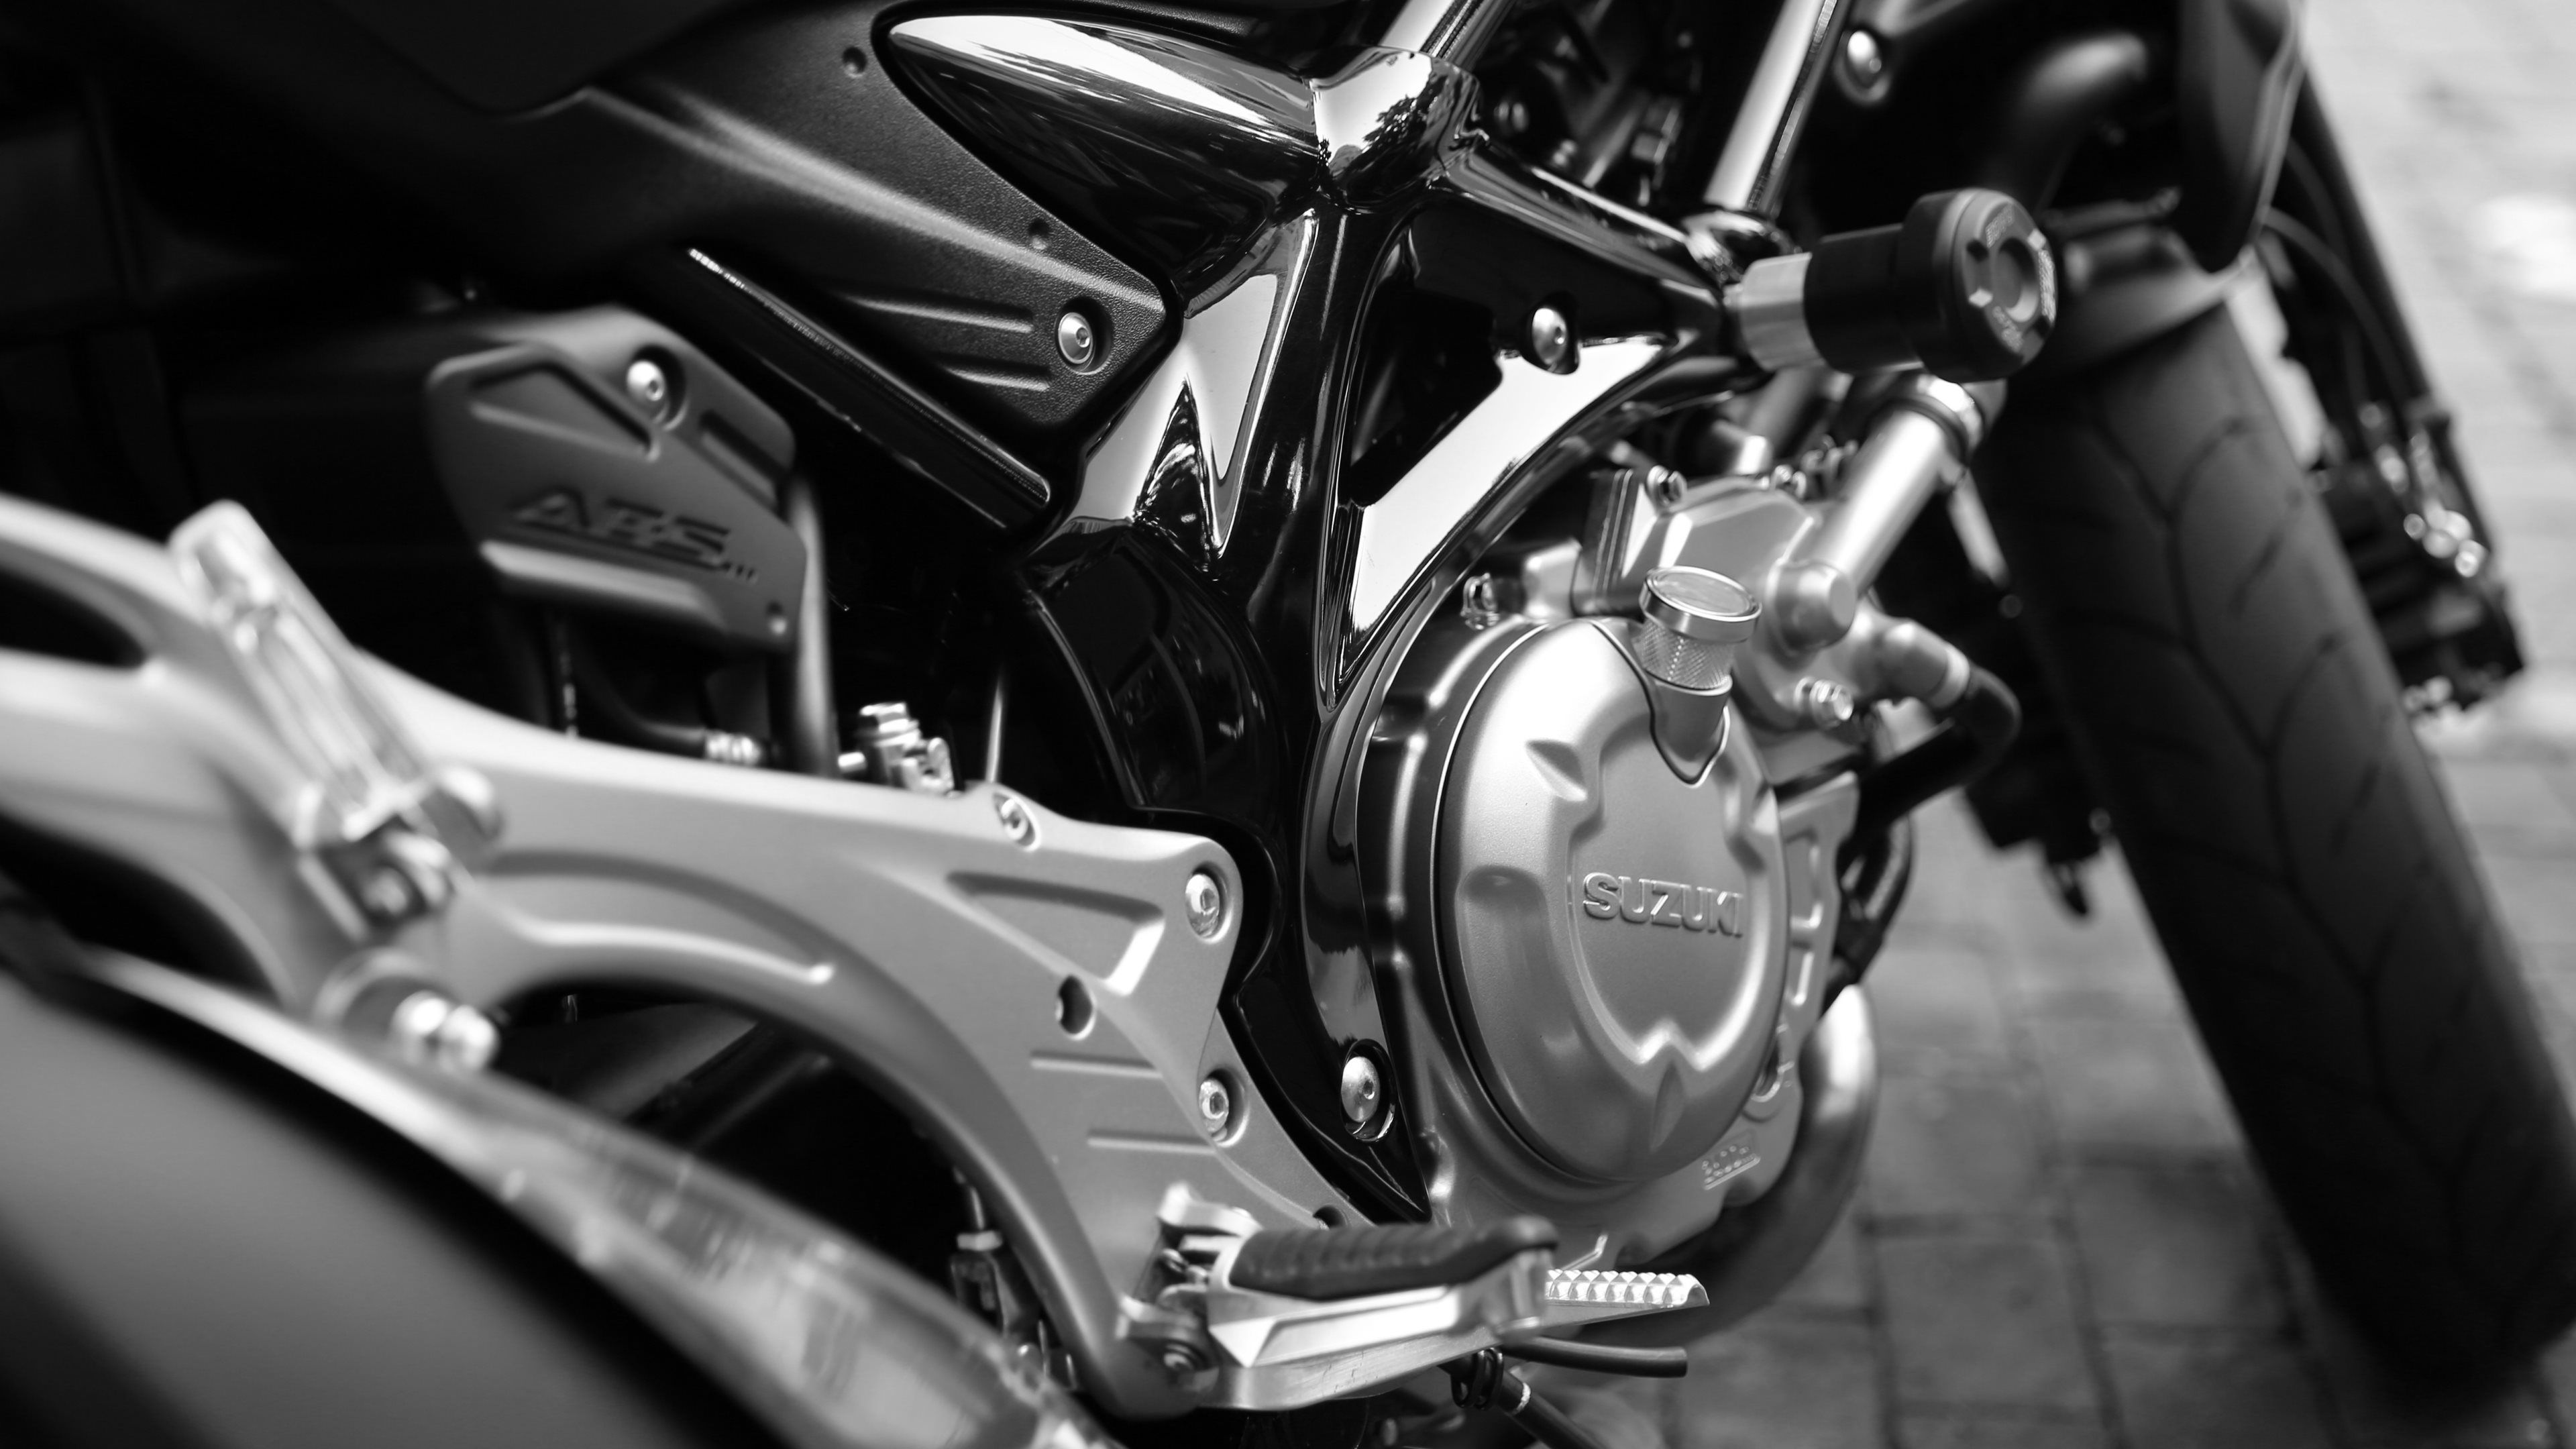 Close Up Of A Suzuki Motorbike 4k Ultra HD Wallpaper. Background